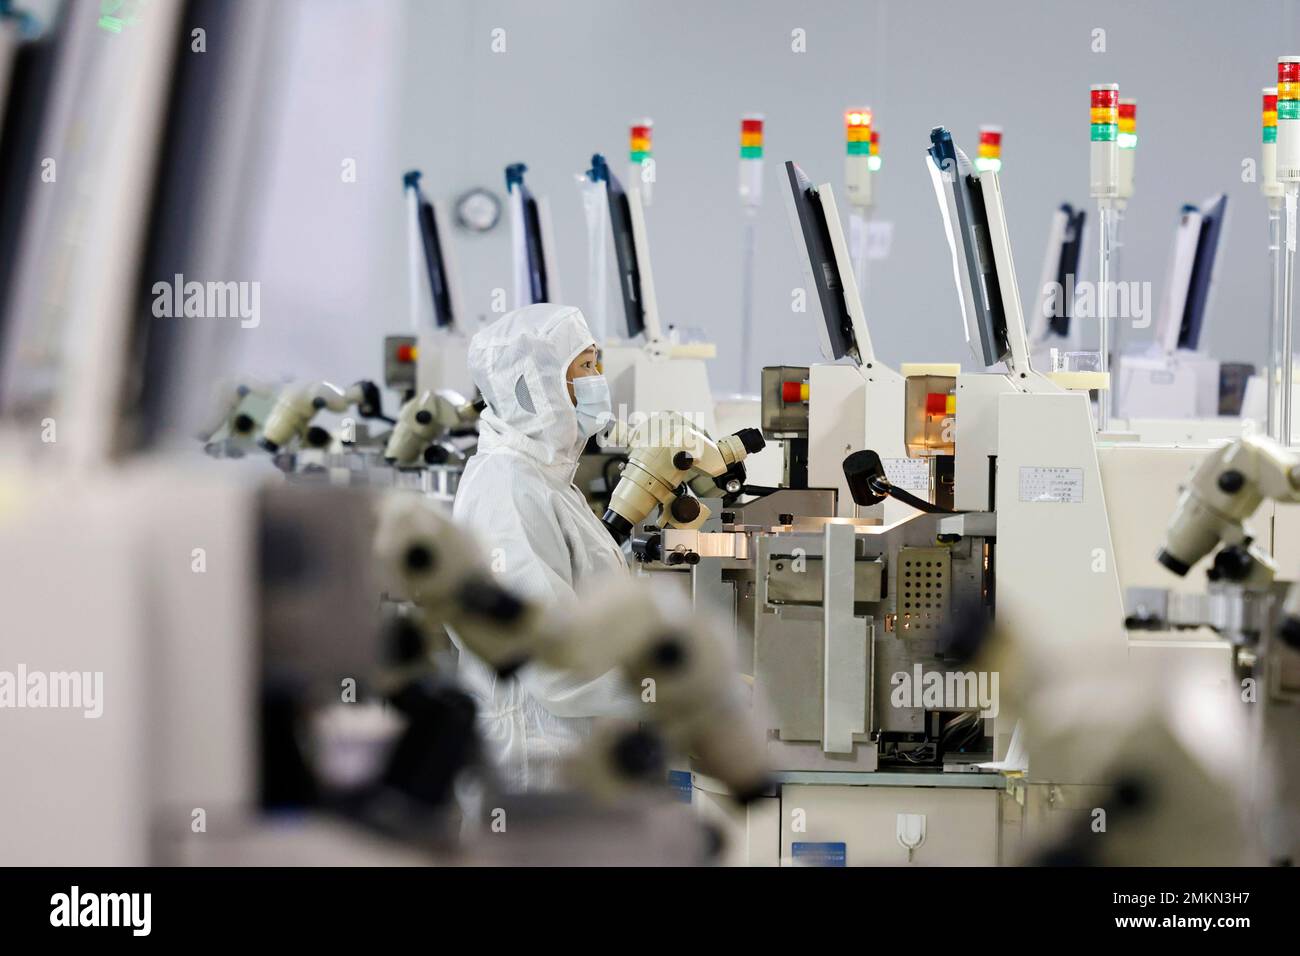 SUQIAN, CHINA - 29. JANUAR 2023 - Arbeiter stellen elektronische Chips in einer Werkstatt in Suqian, Ostchina Provinz Jiangsu, am 29. Januar 2023 her. (Foto: CFOTO/Sipa USA) Stockfoto